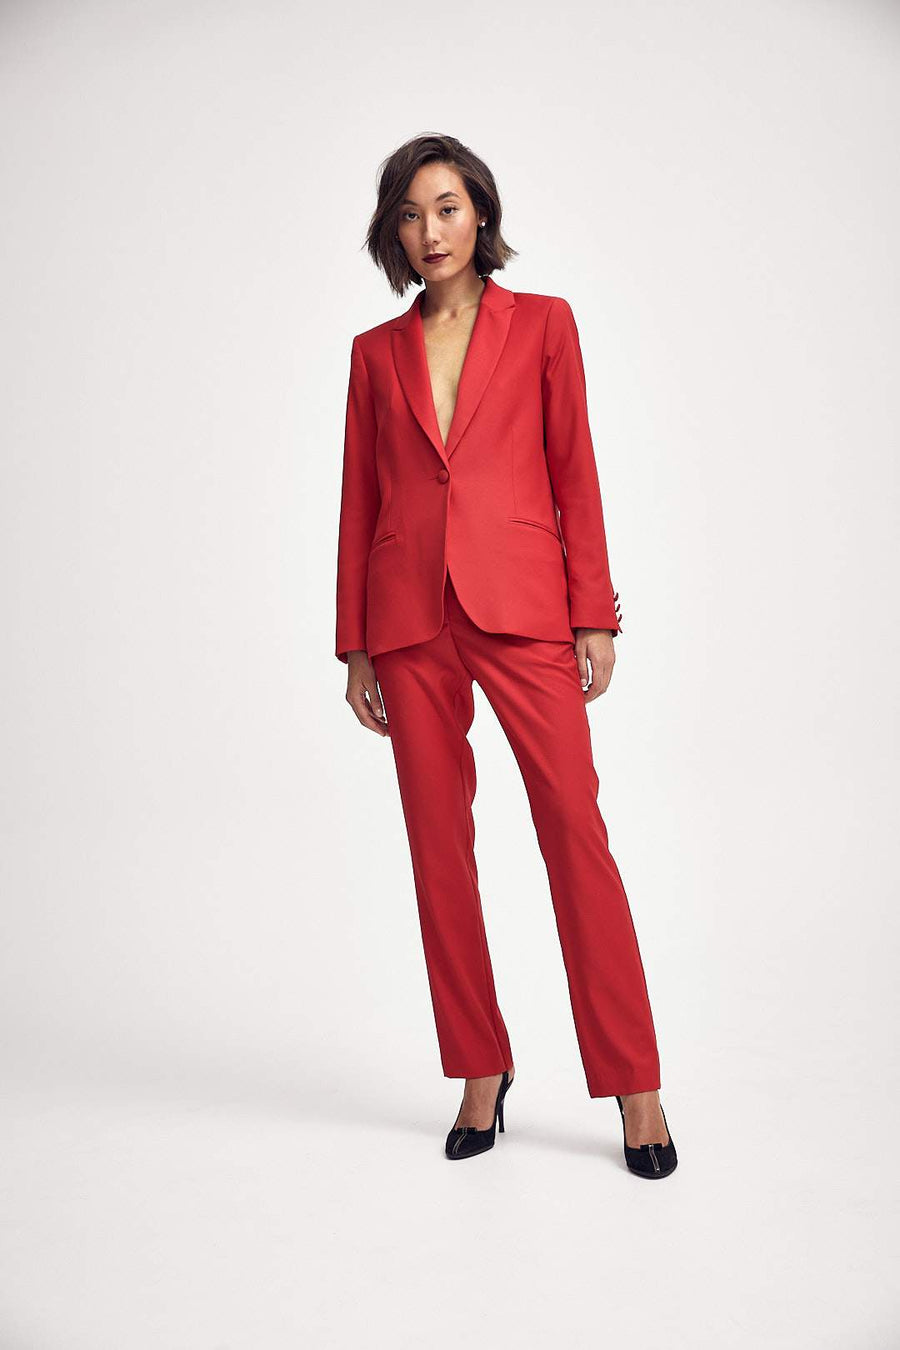 Women's Luxury Clothing - Lindsay Nicholas New York | Lindsay Nicholas ...